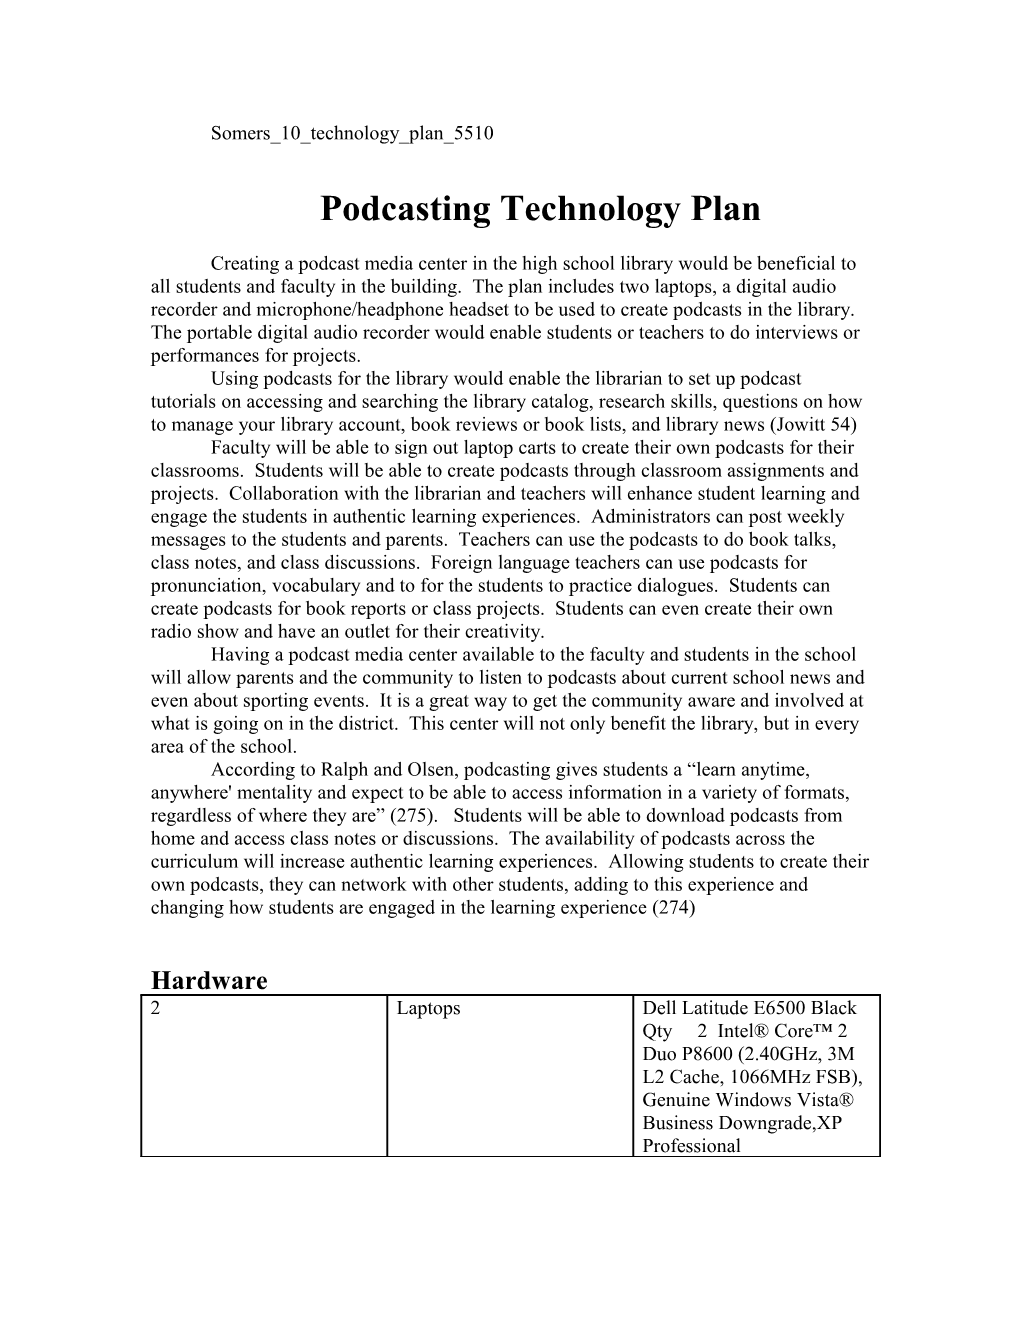 Podcasting Technology Plan